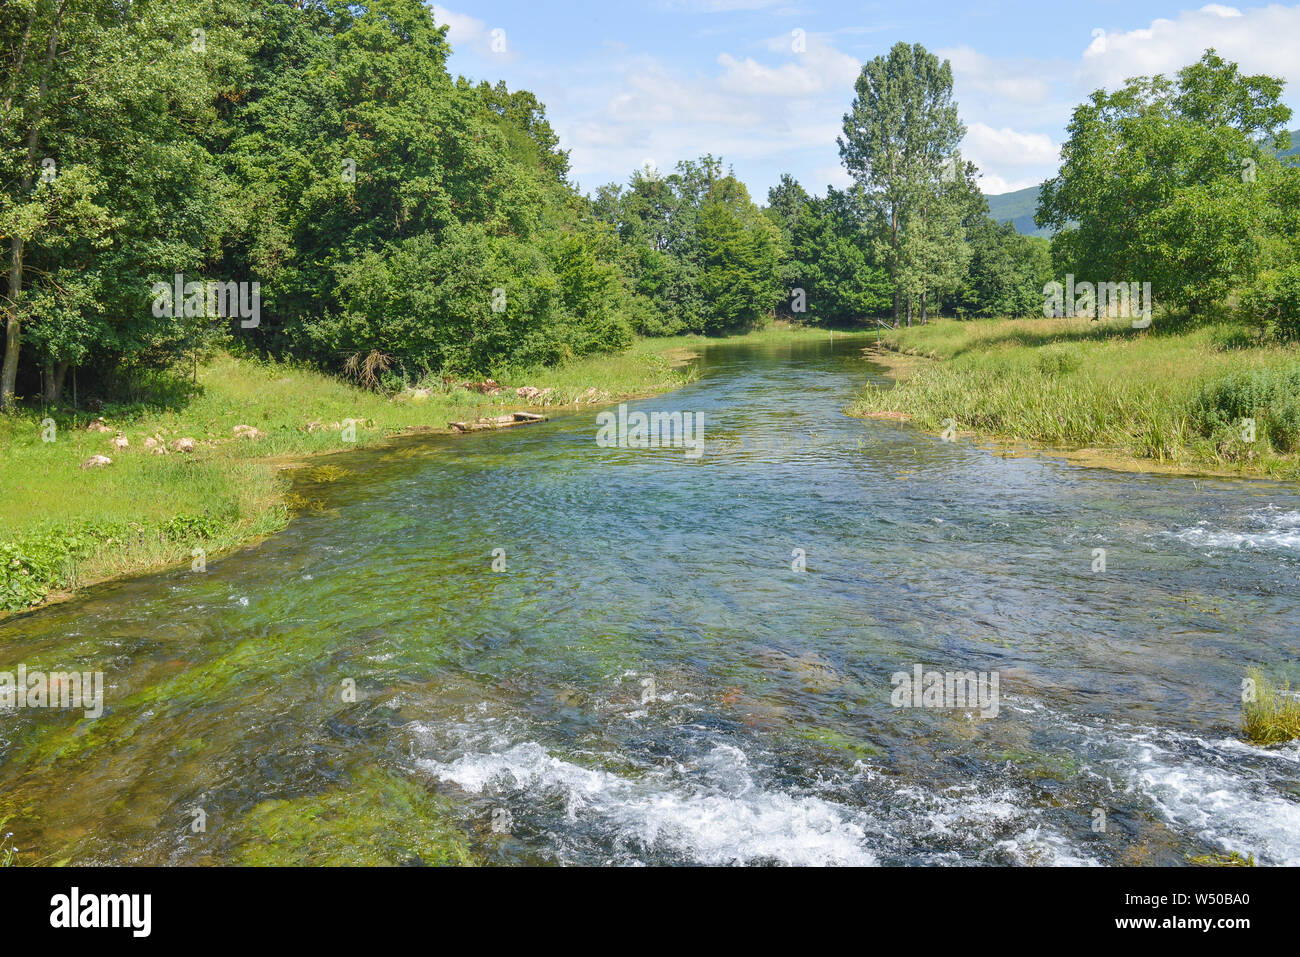 River Gacka springs, Gacka Valley, Tonkovića vrilo Stock Photo